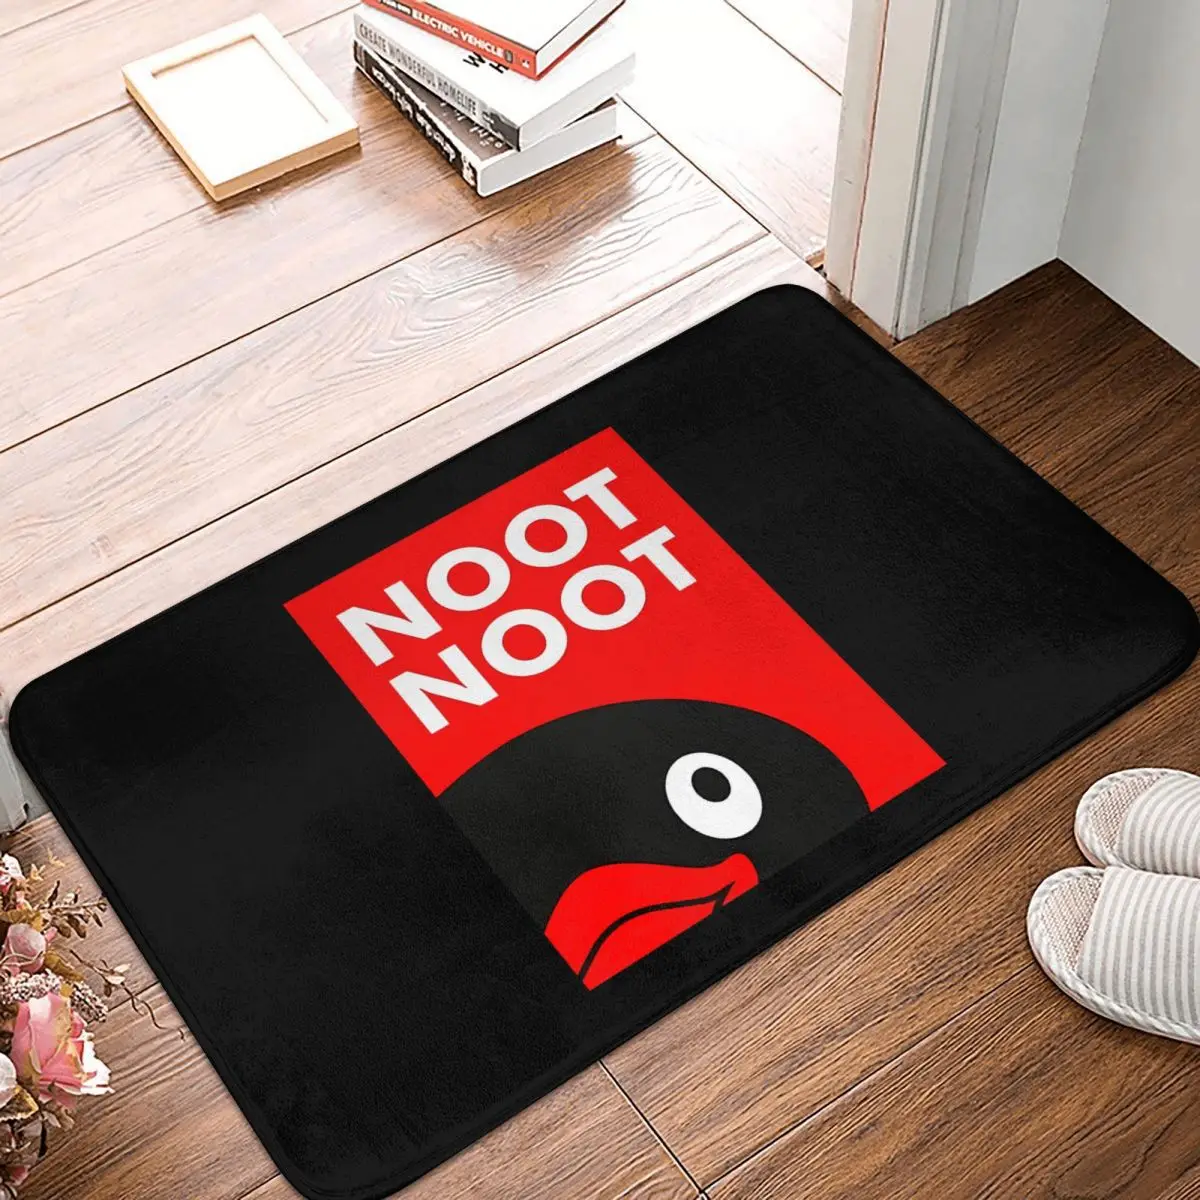 

Pingu Noot Pinga Penguin TV Bath Non-Slip Carpet Red Bedroom Mat Entrance Door Doormat Home Decor Rug